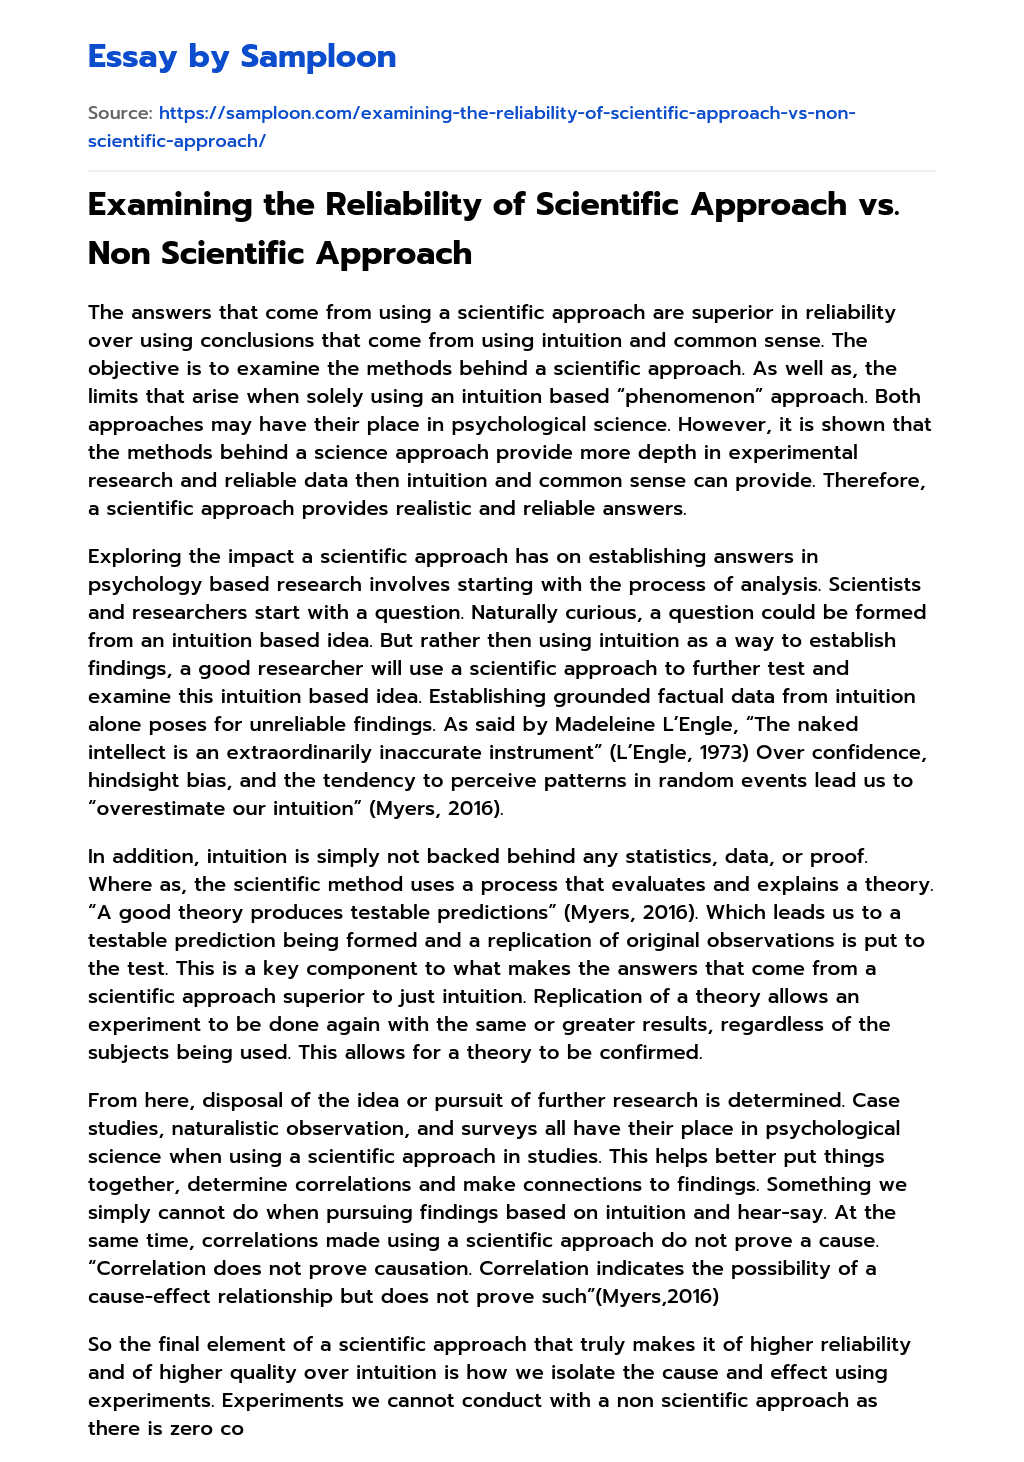 Examining the Reliability of Scientific Approach vs. Non Scientific Approach essay